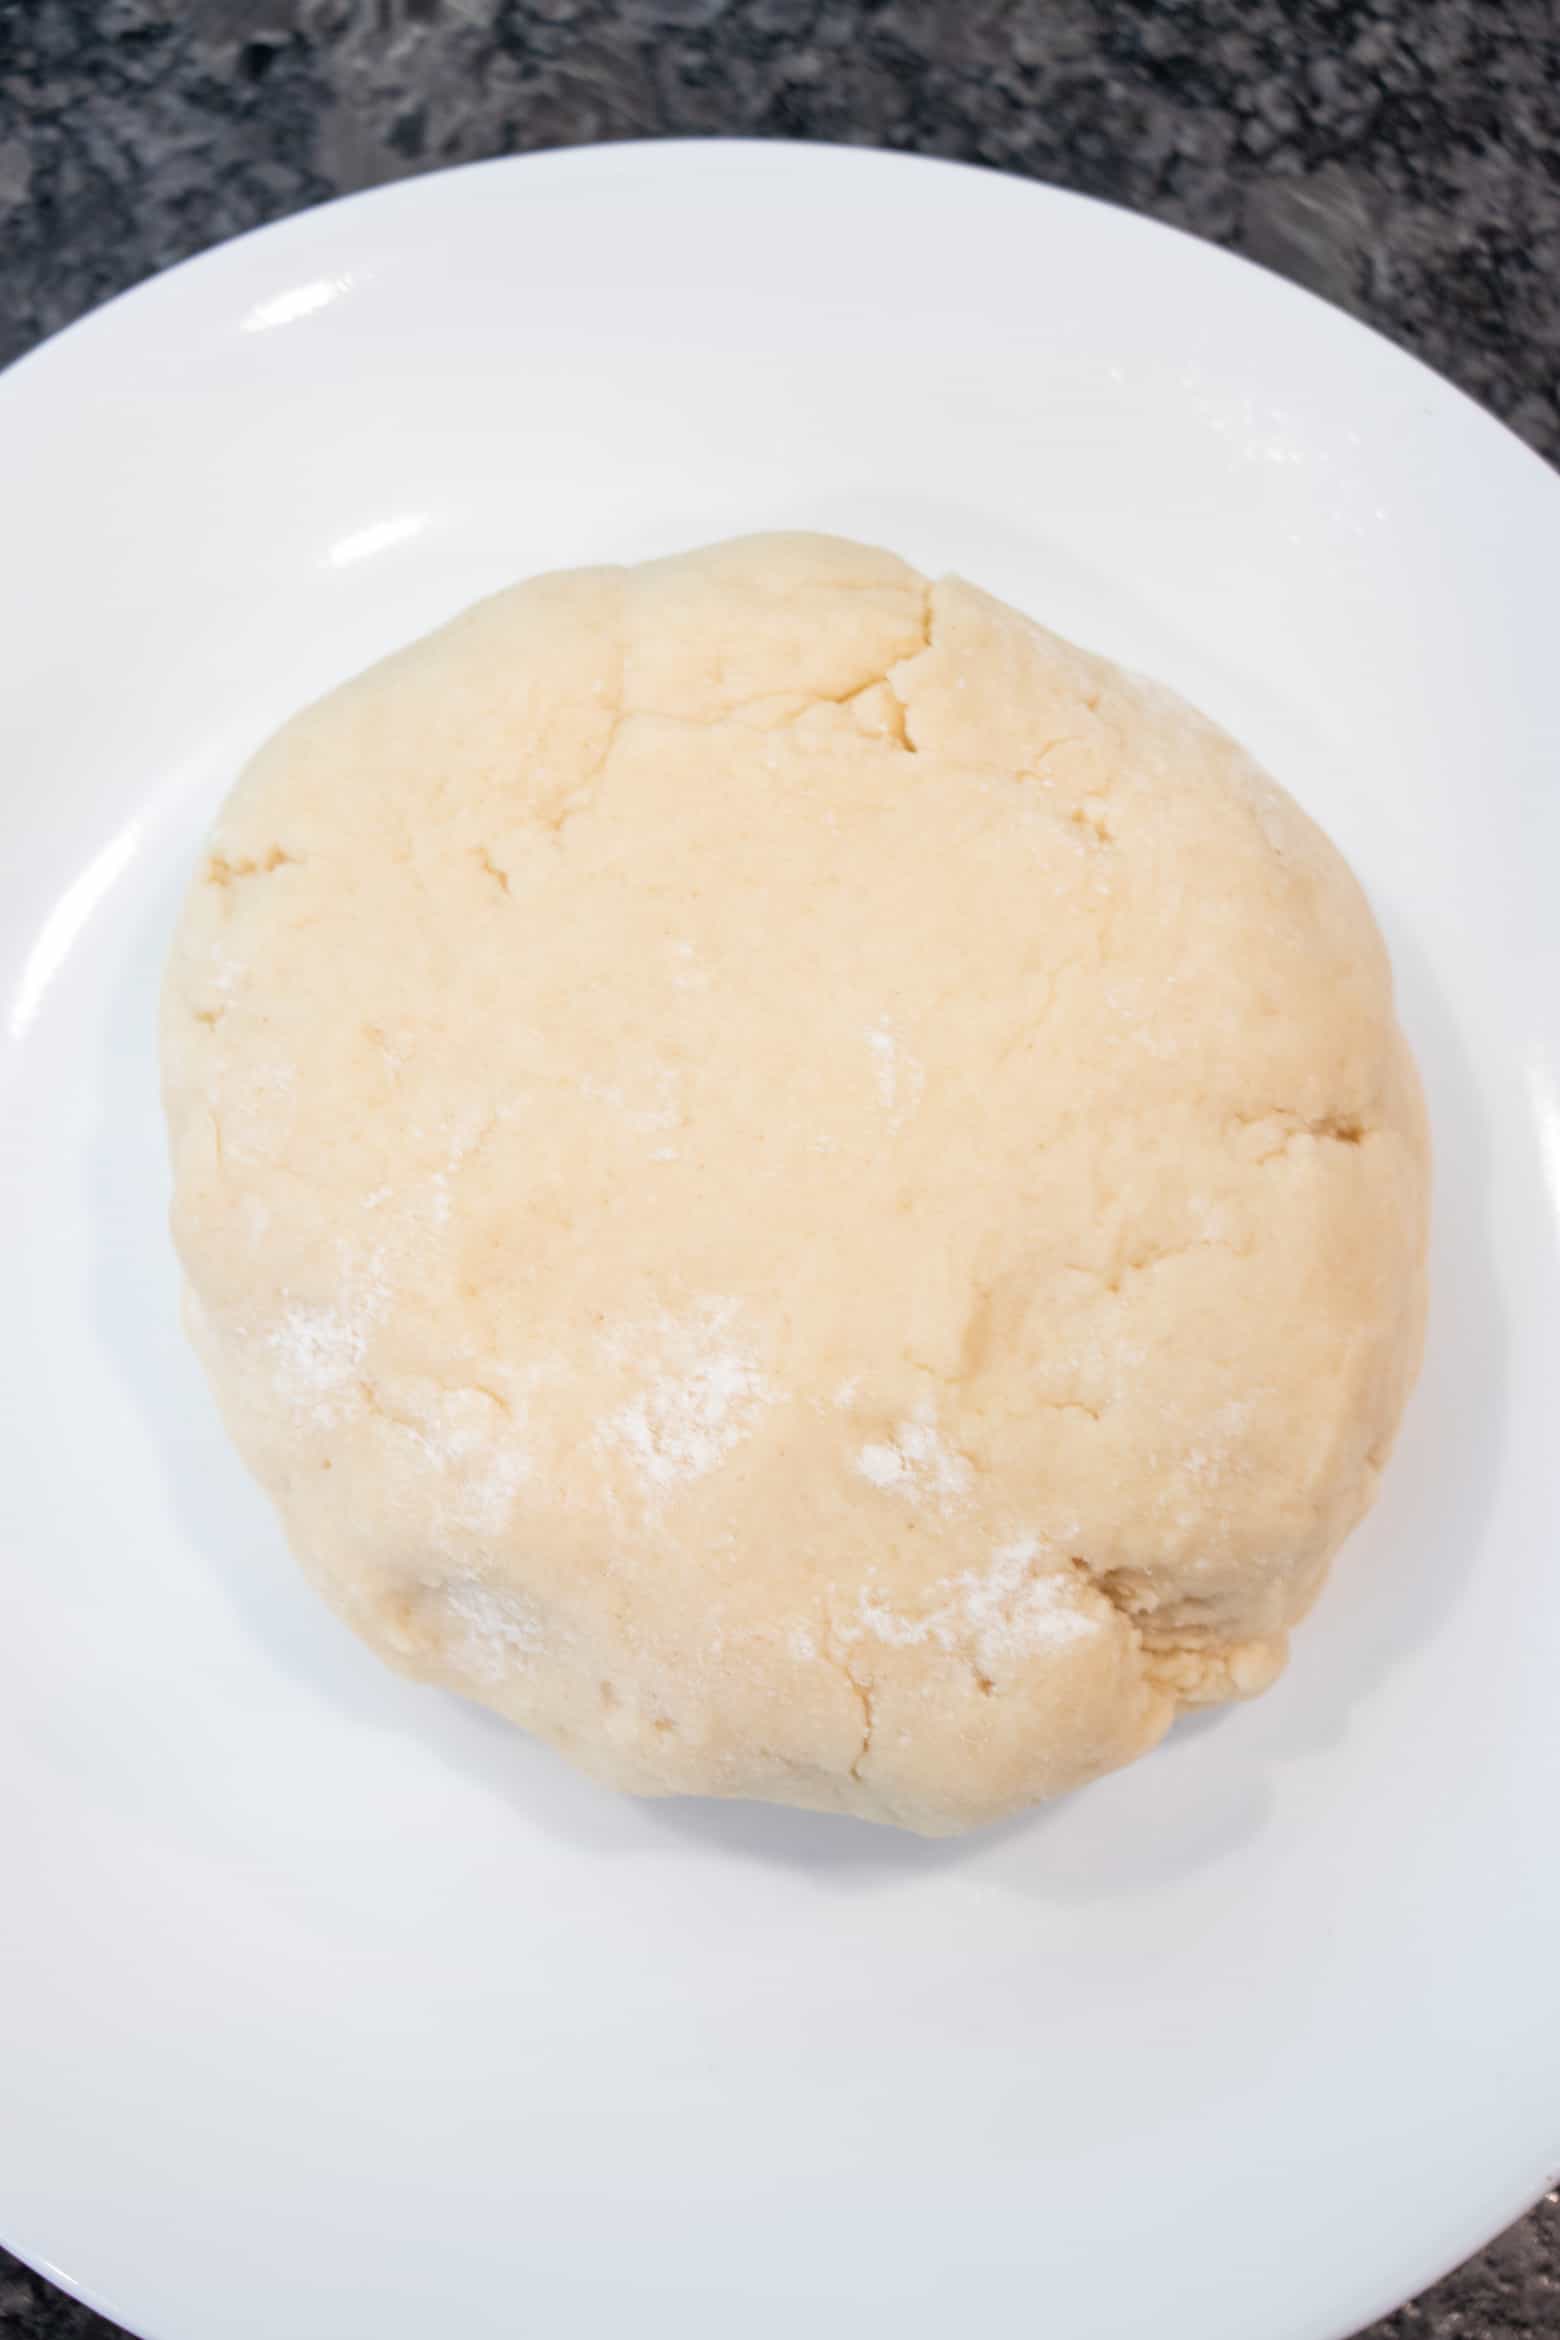 Pie dough on a plate.